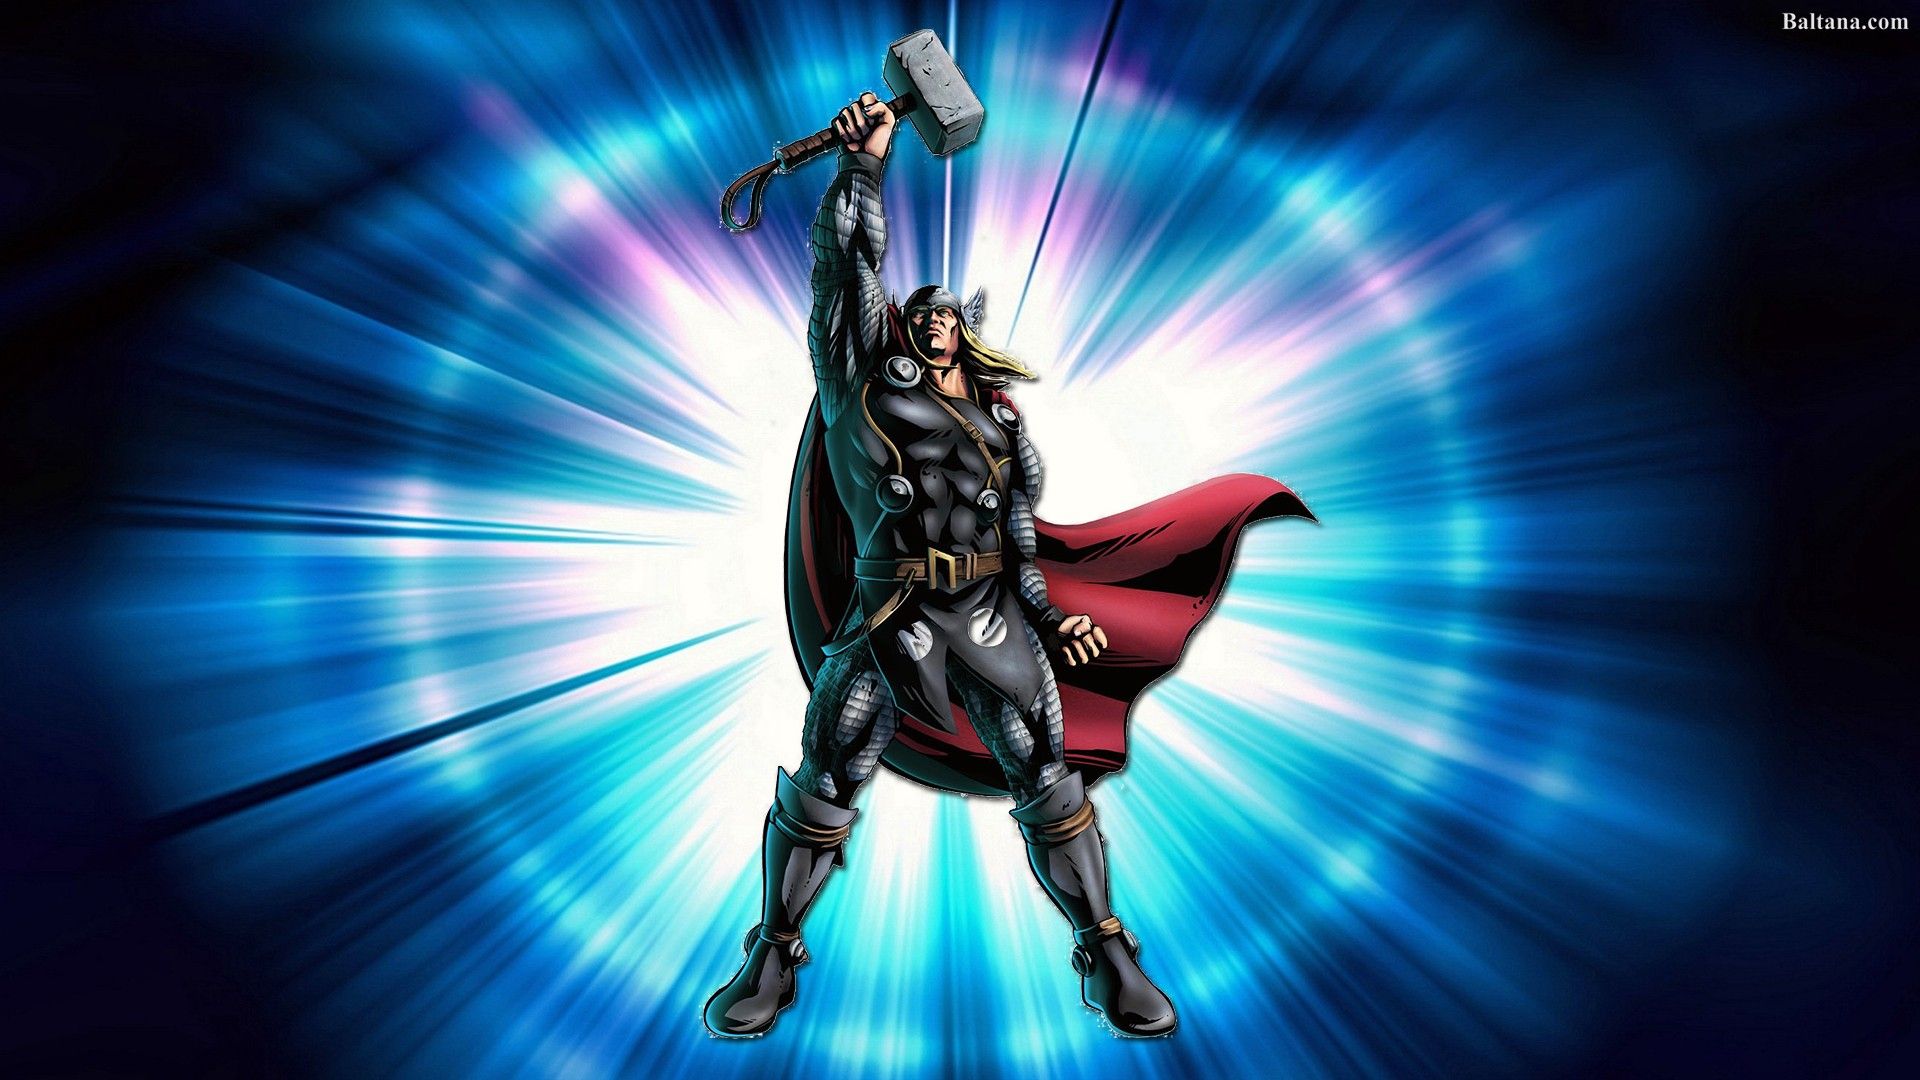 Wallpaper of Thor in Avengers Endgame | HD Wallpapers